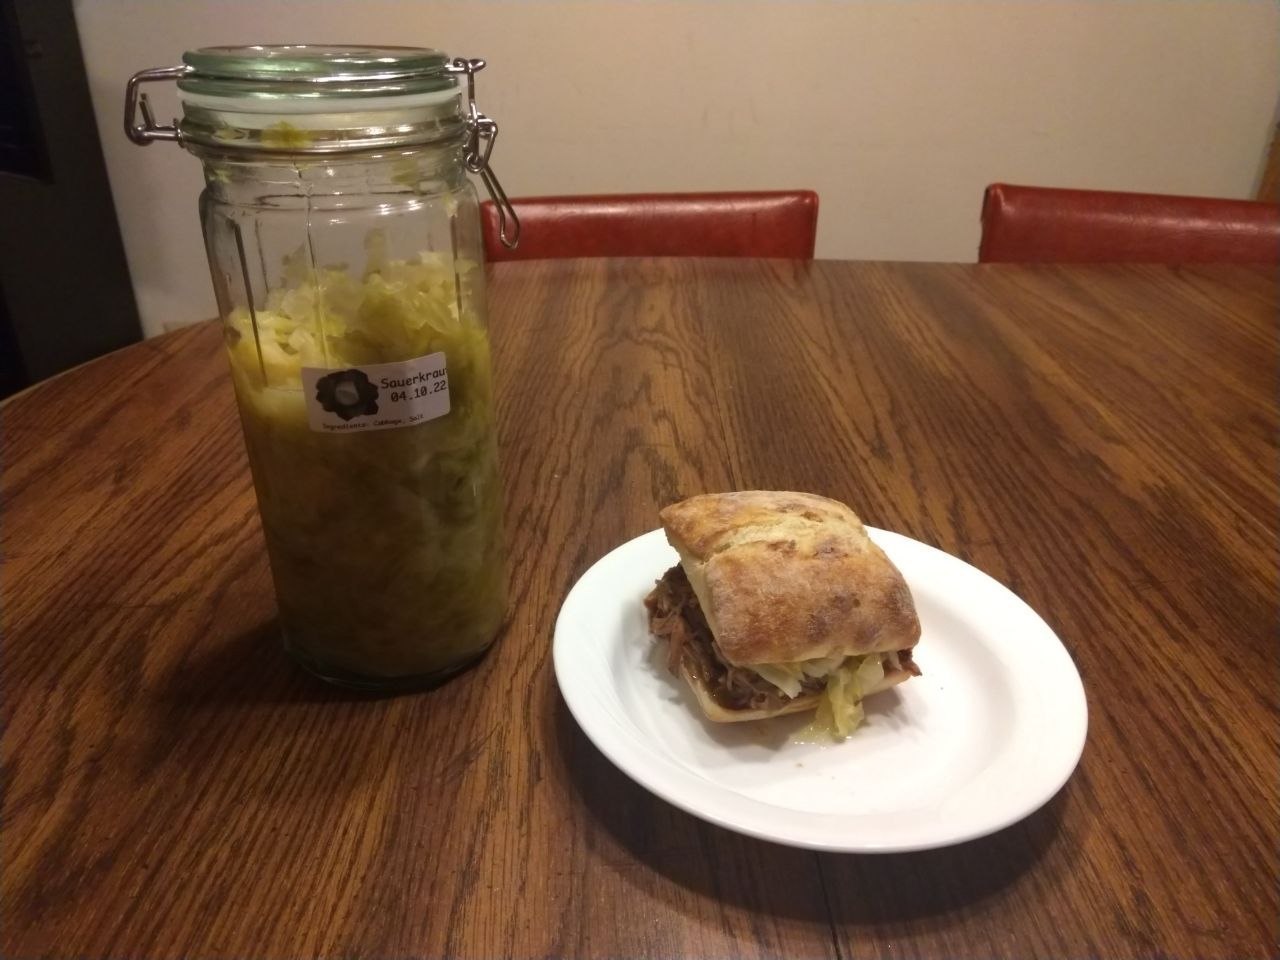 A sandwich with Italian beef and sauerkraut.